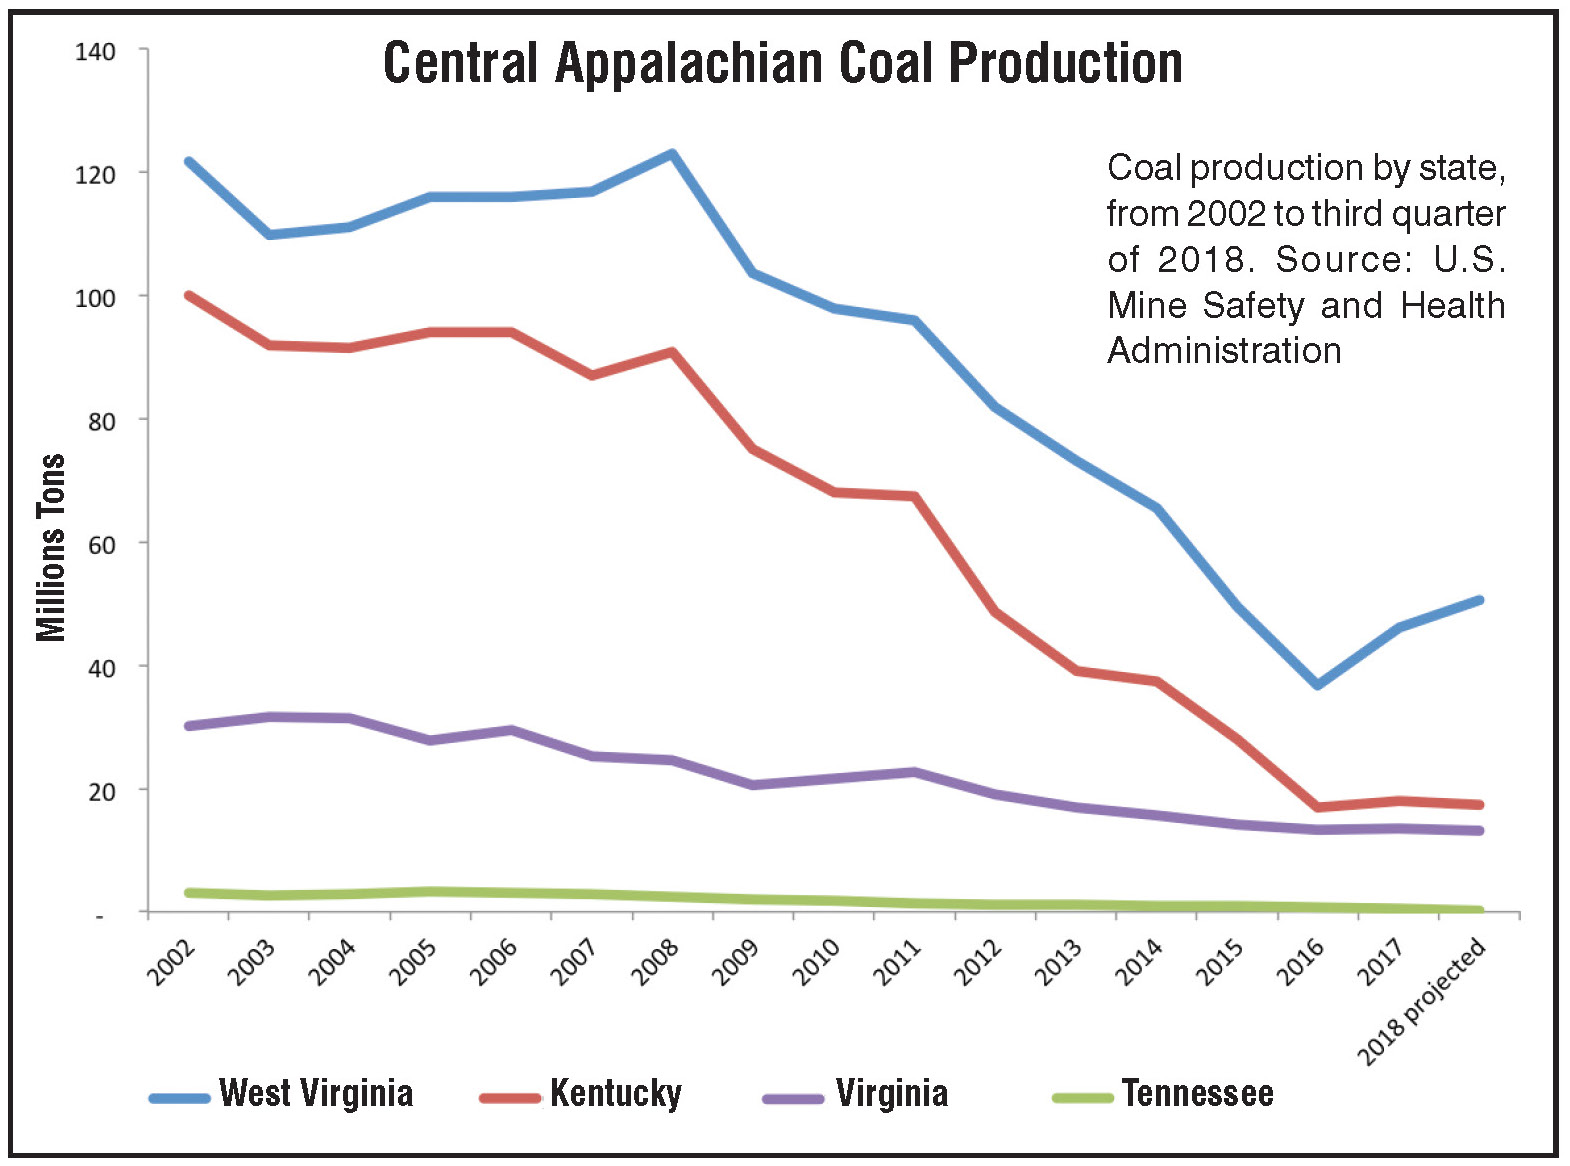 Capp Coal Price Chart